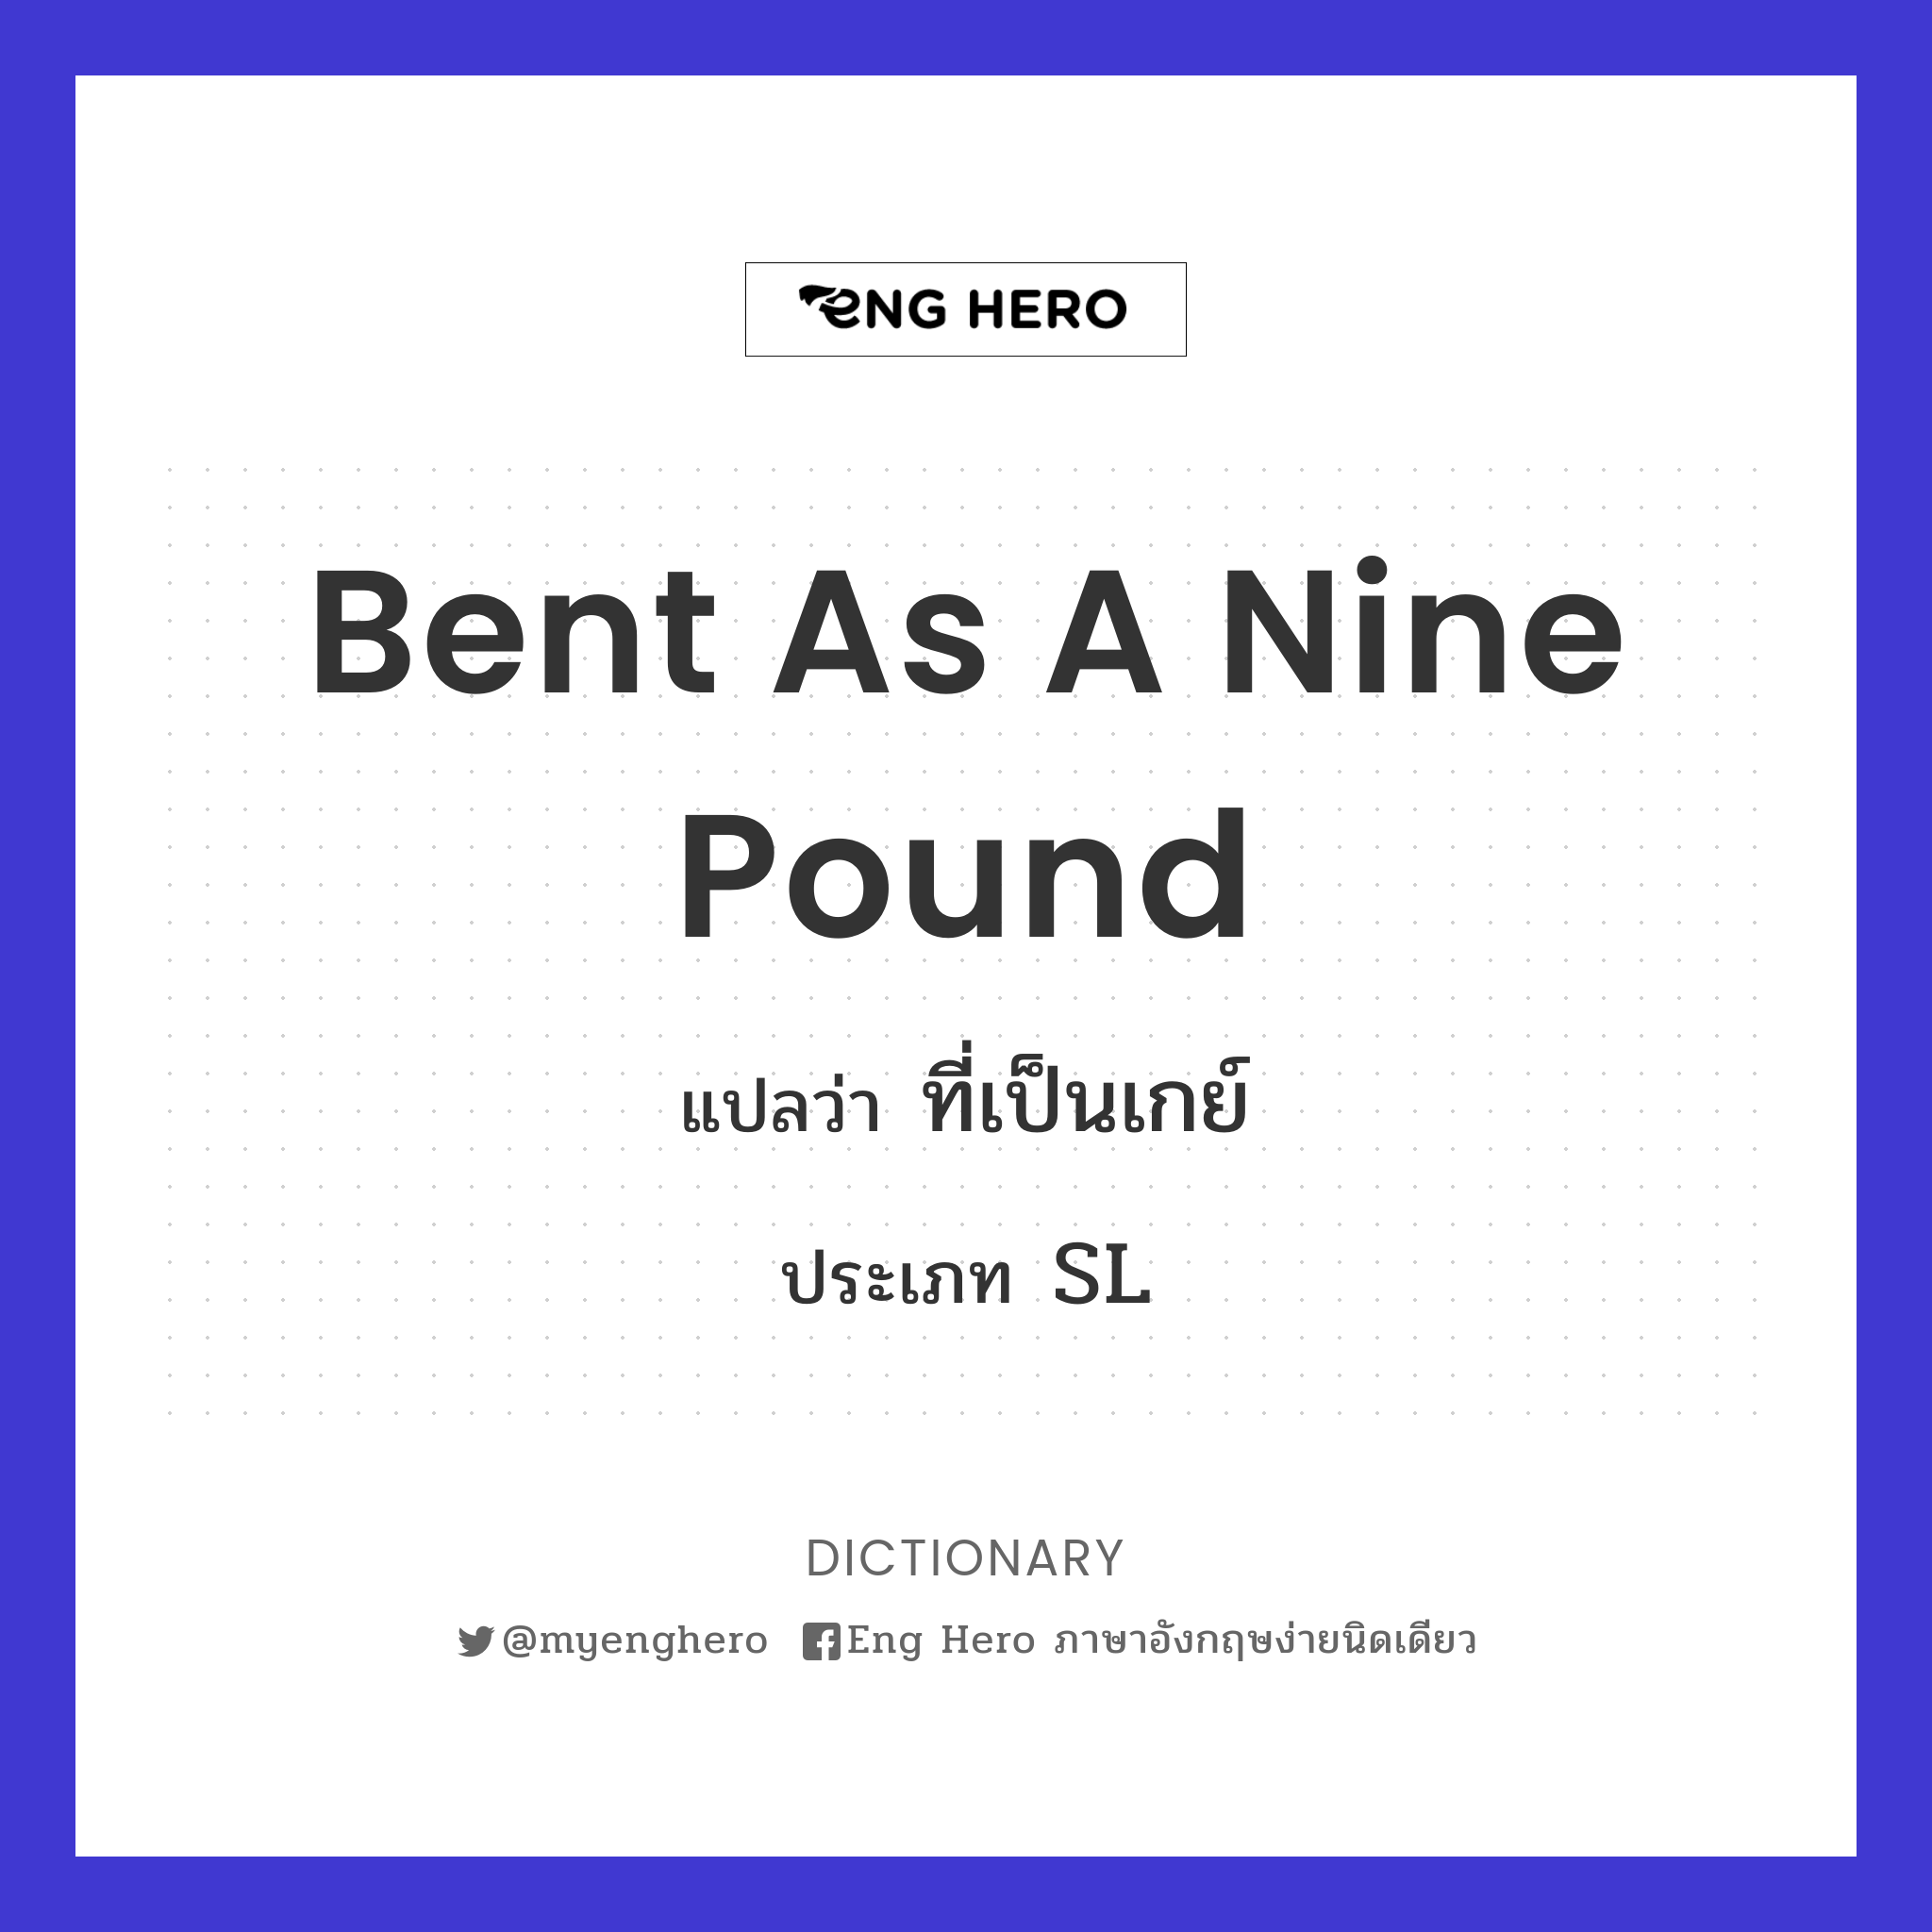 bent as a nine pound